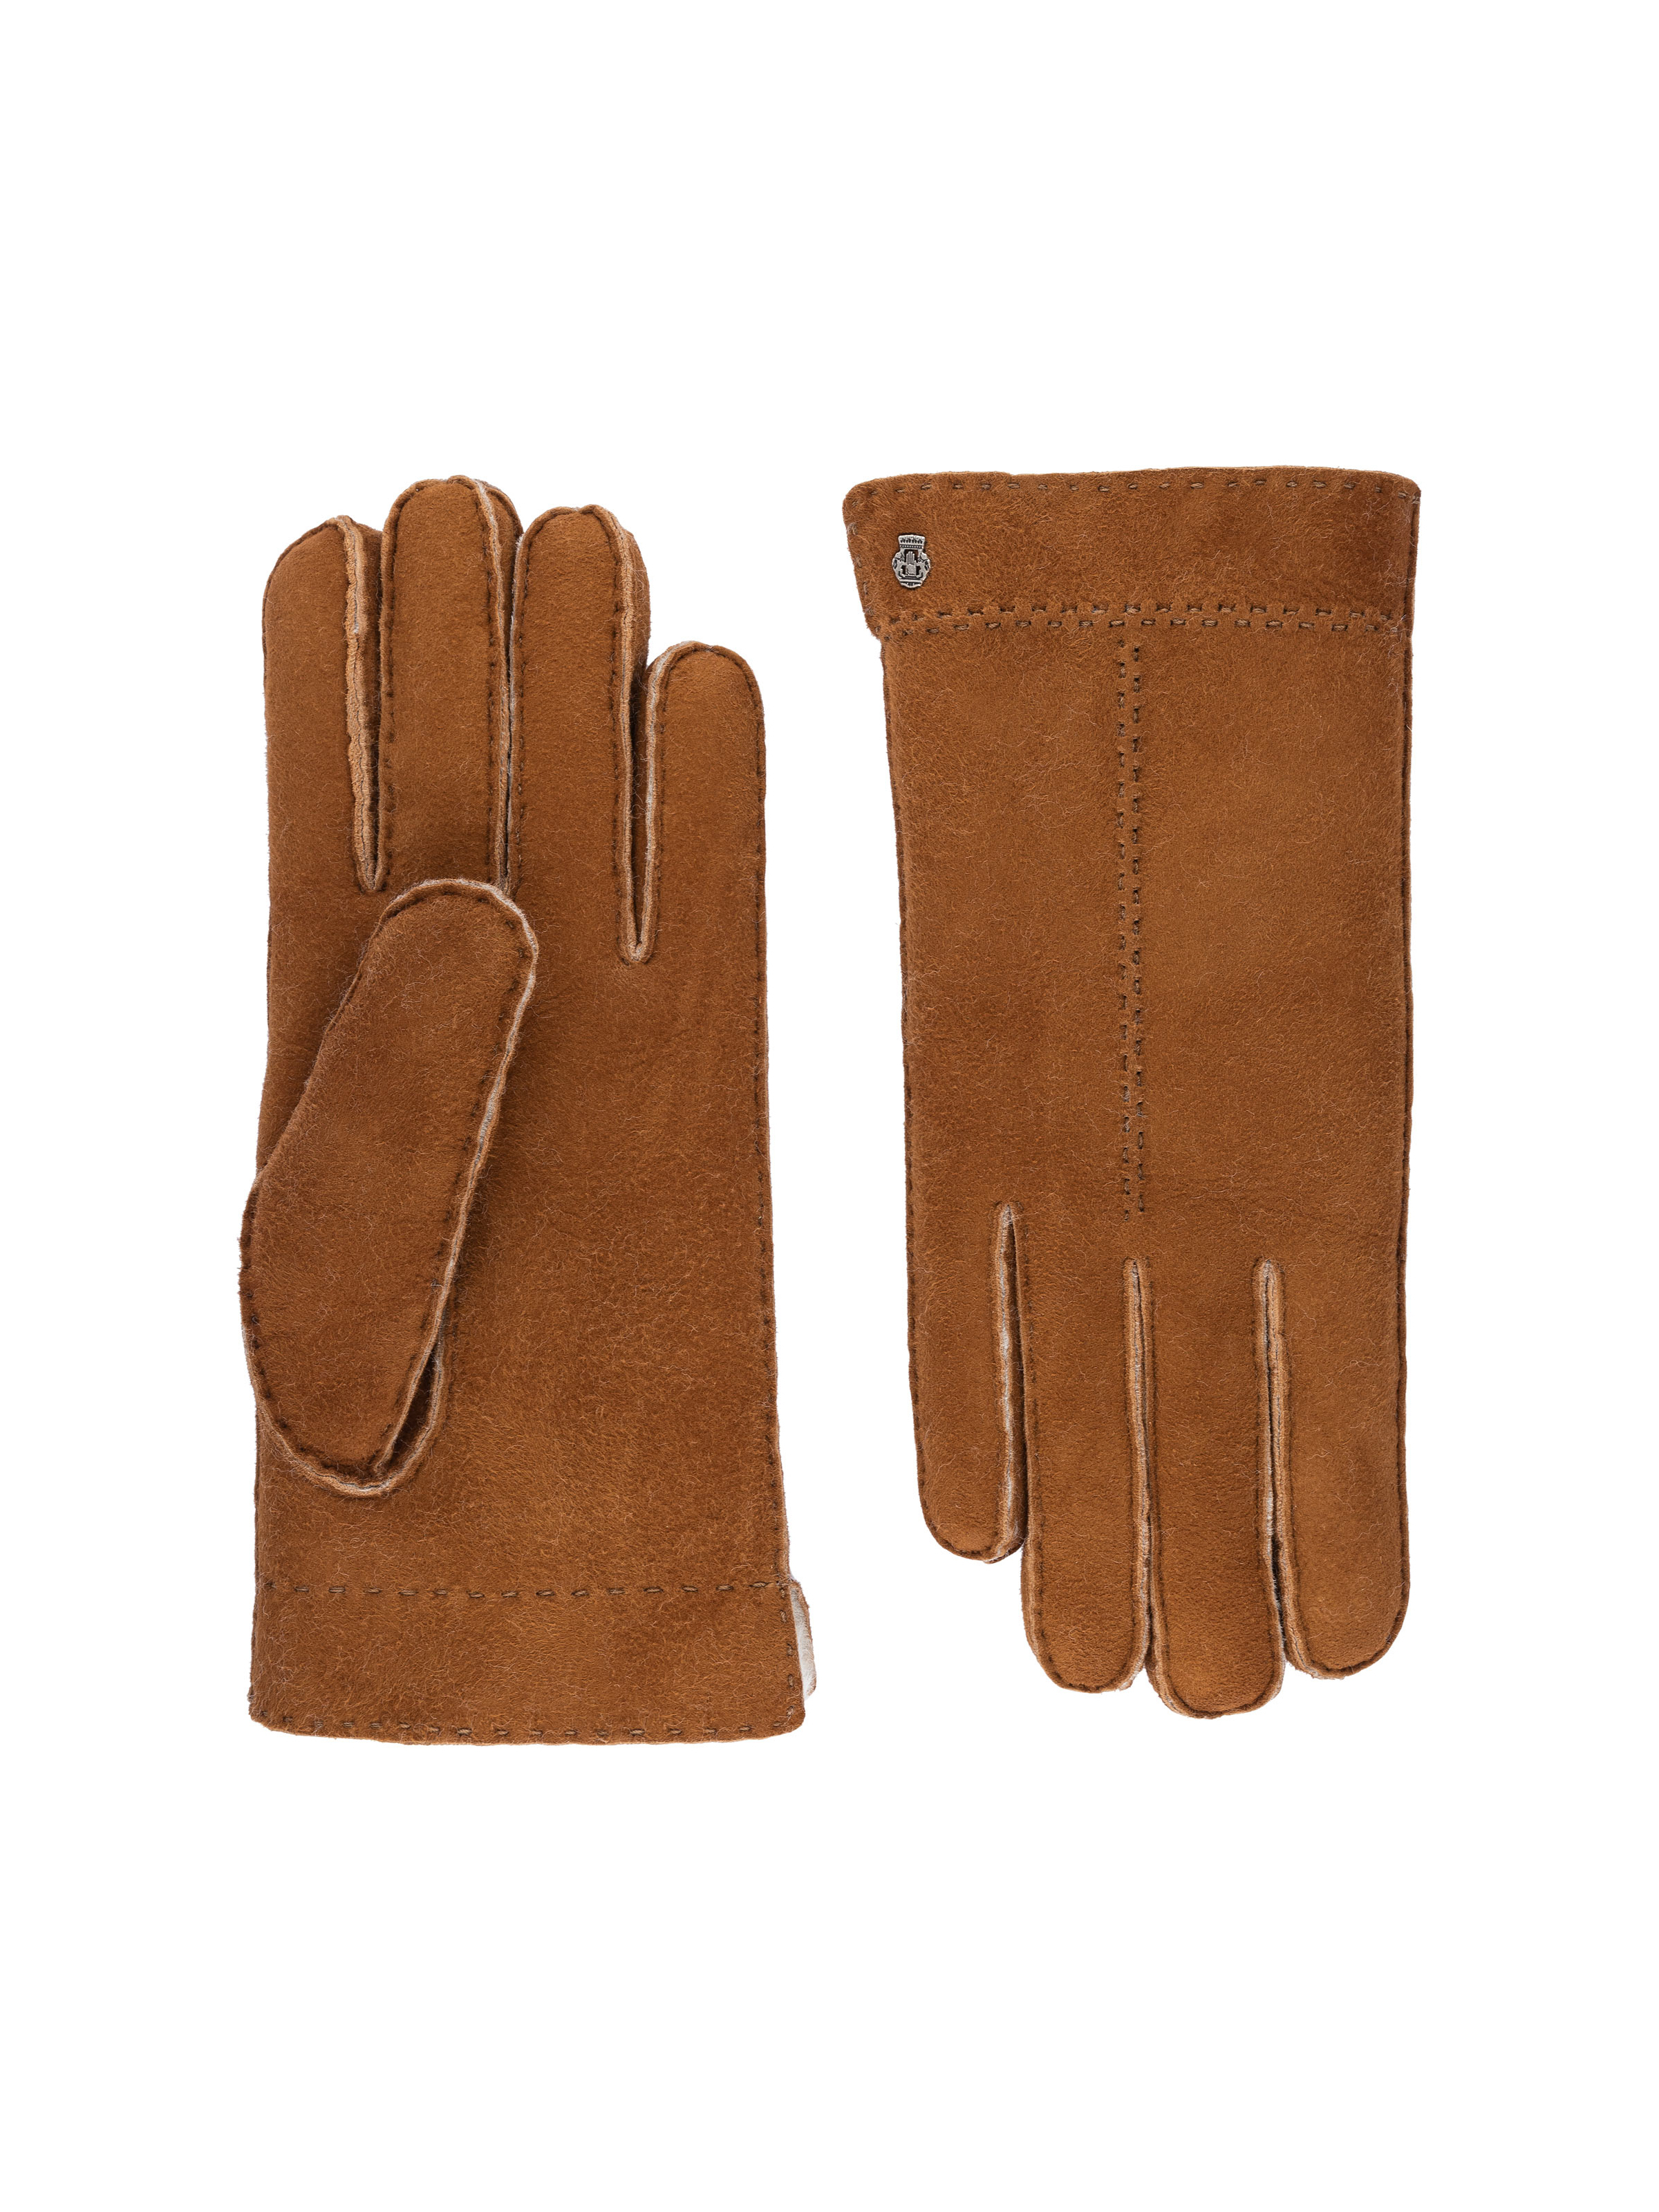 Haselnussfarbene Handschuh aus Leder